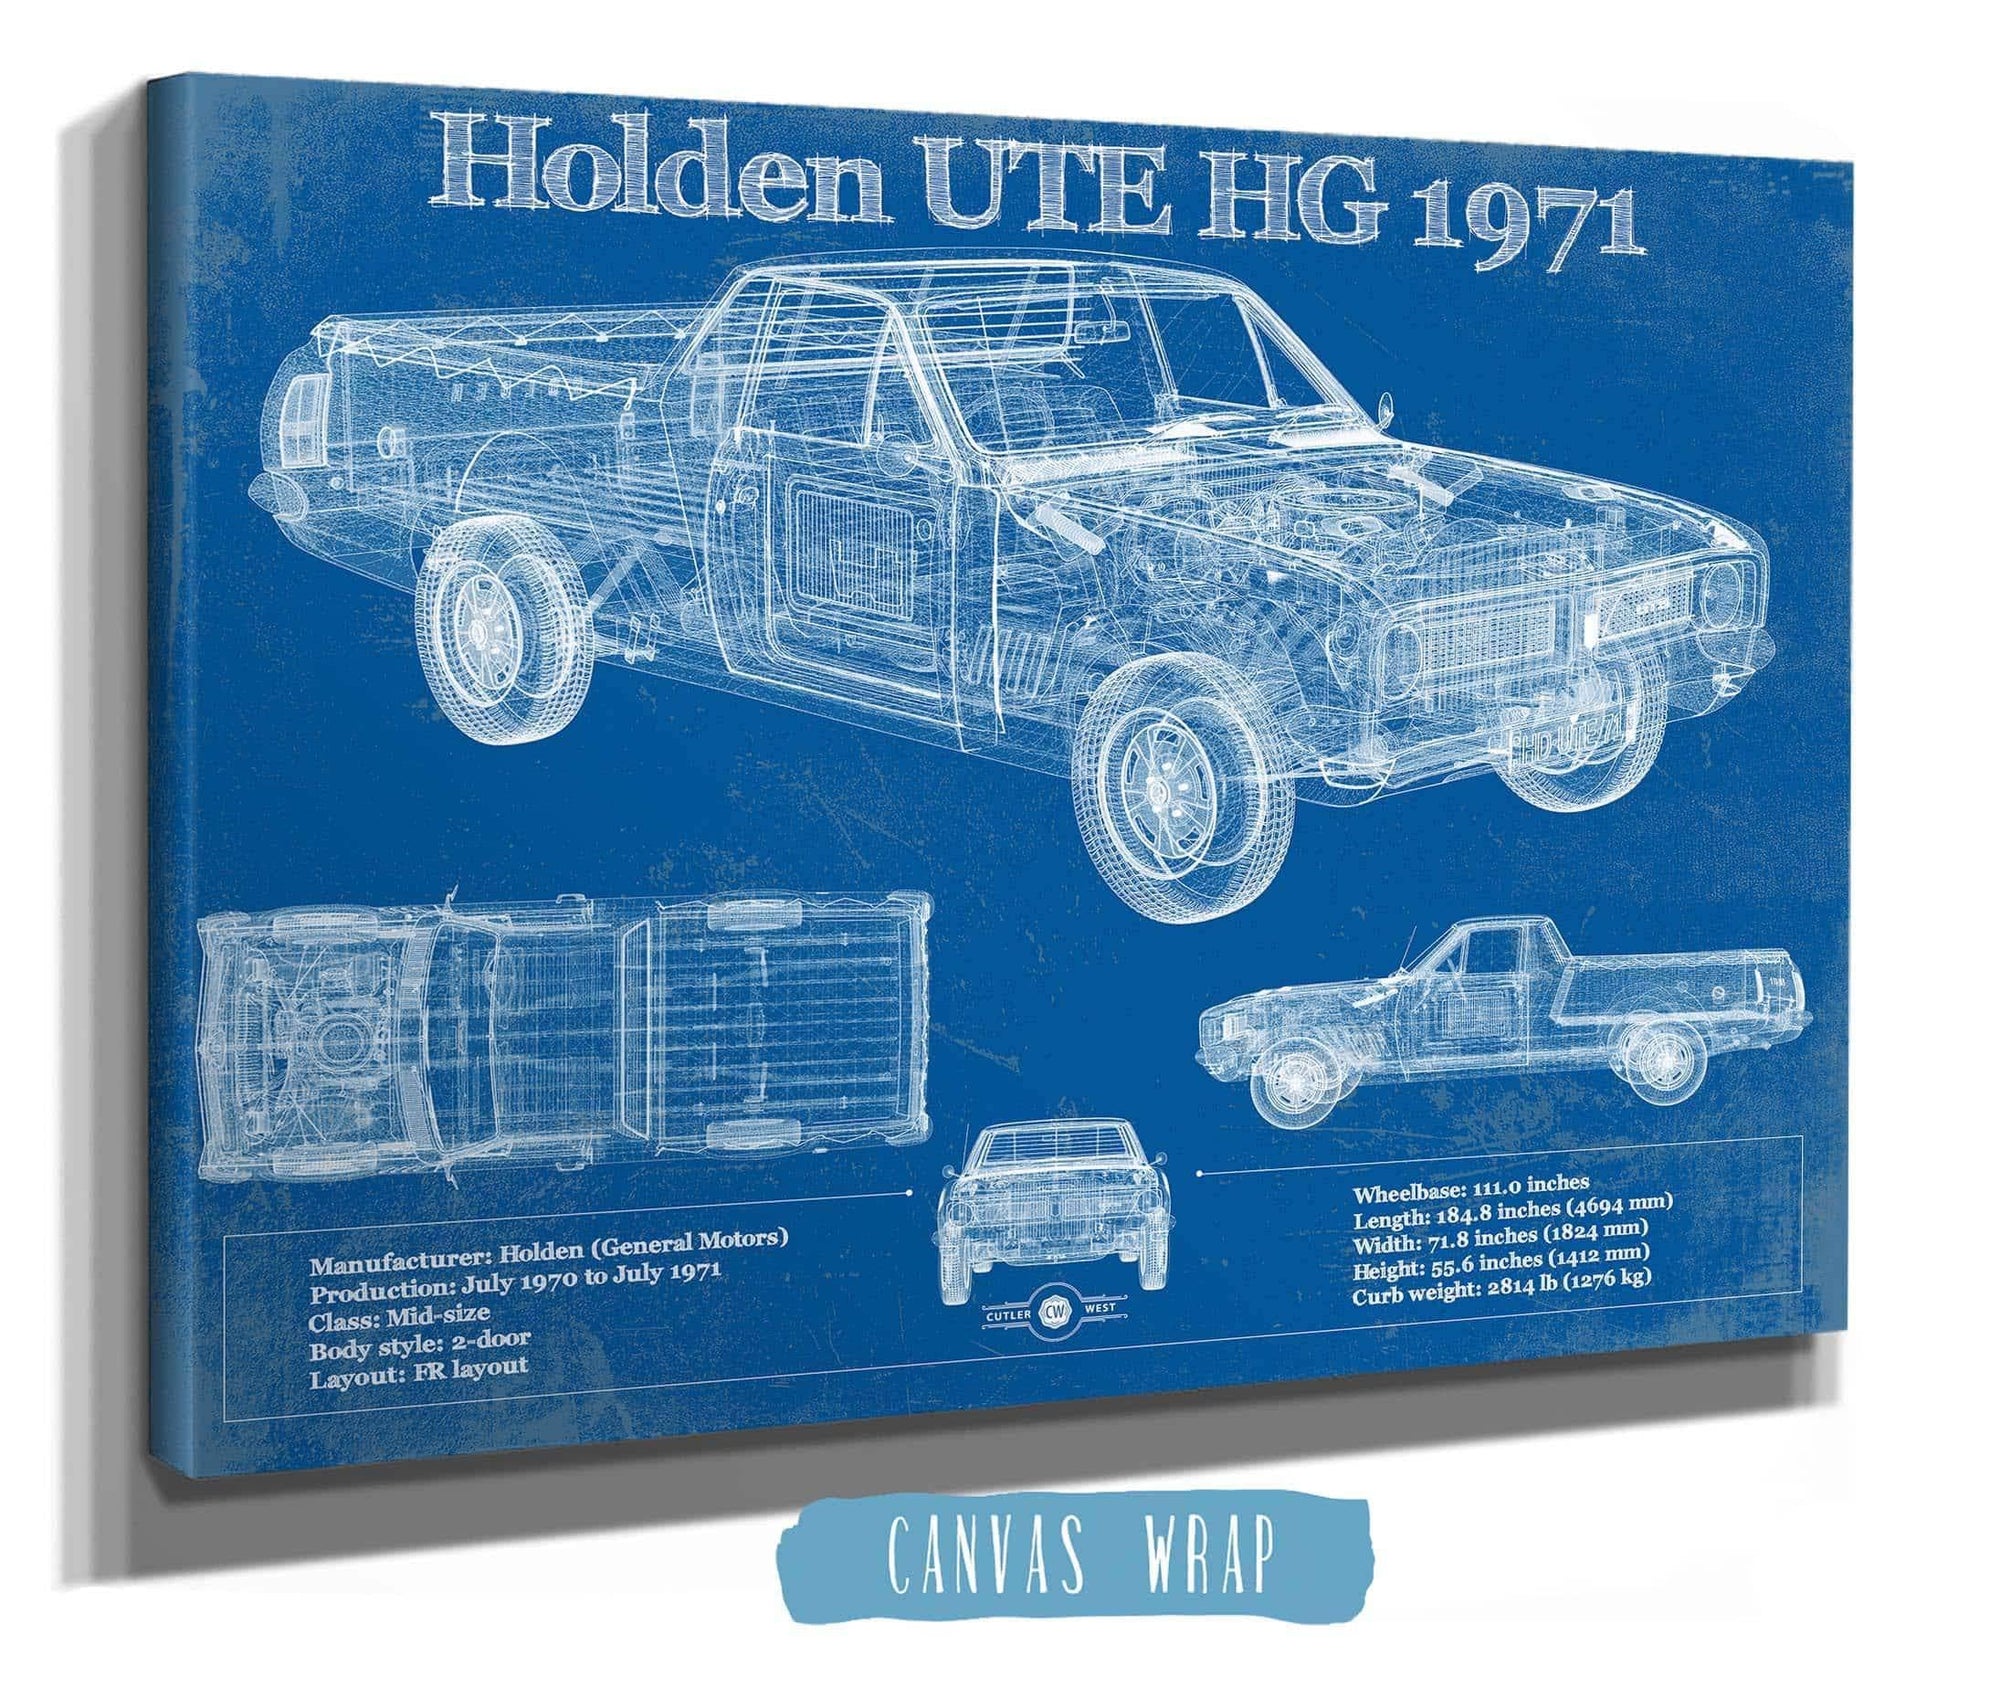 Cutler West Vehicle Collection 1971 Holden HG Belmont ute Vintage Auto Print